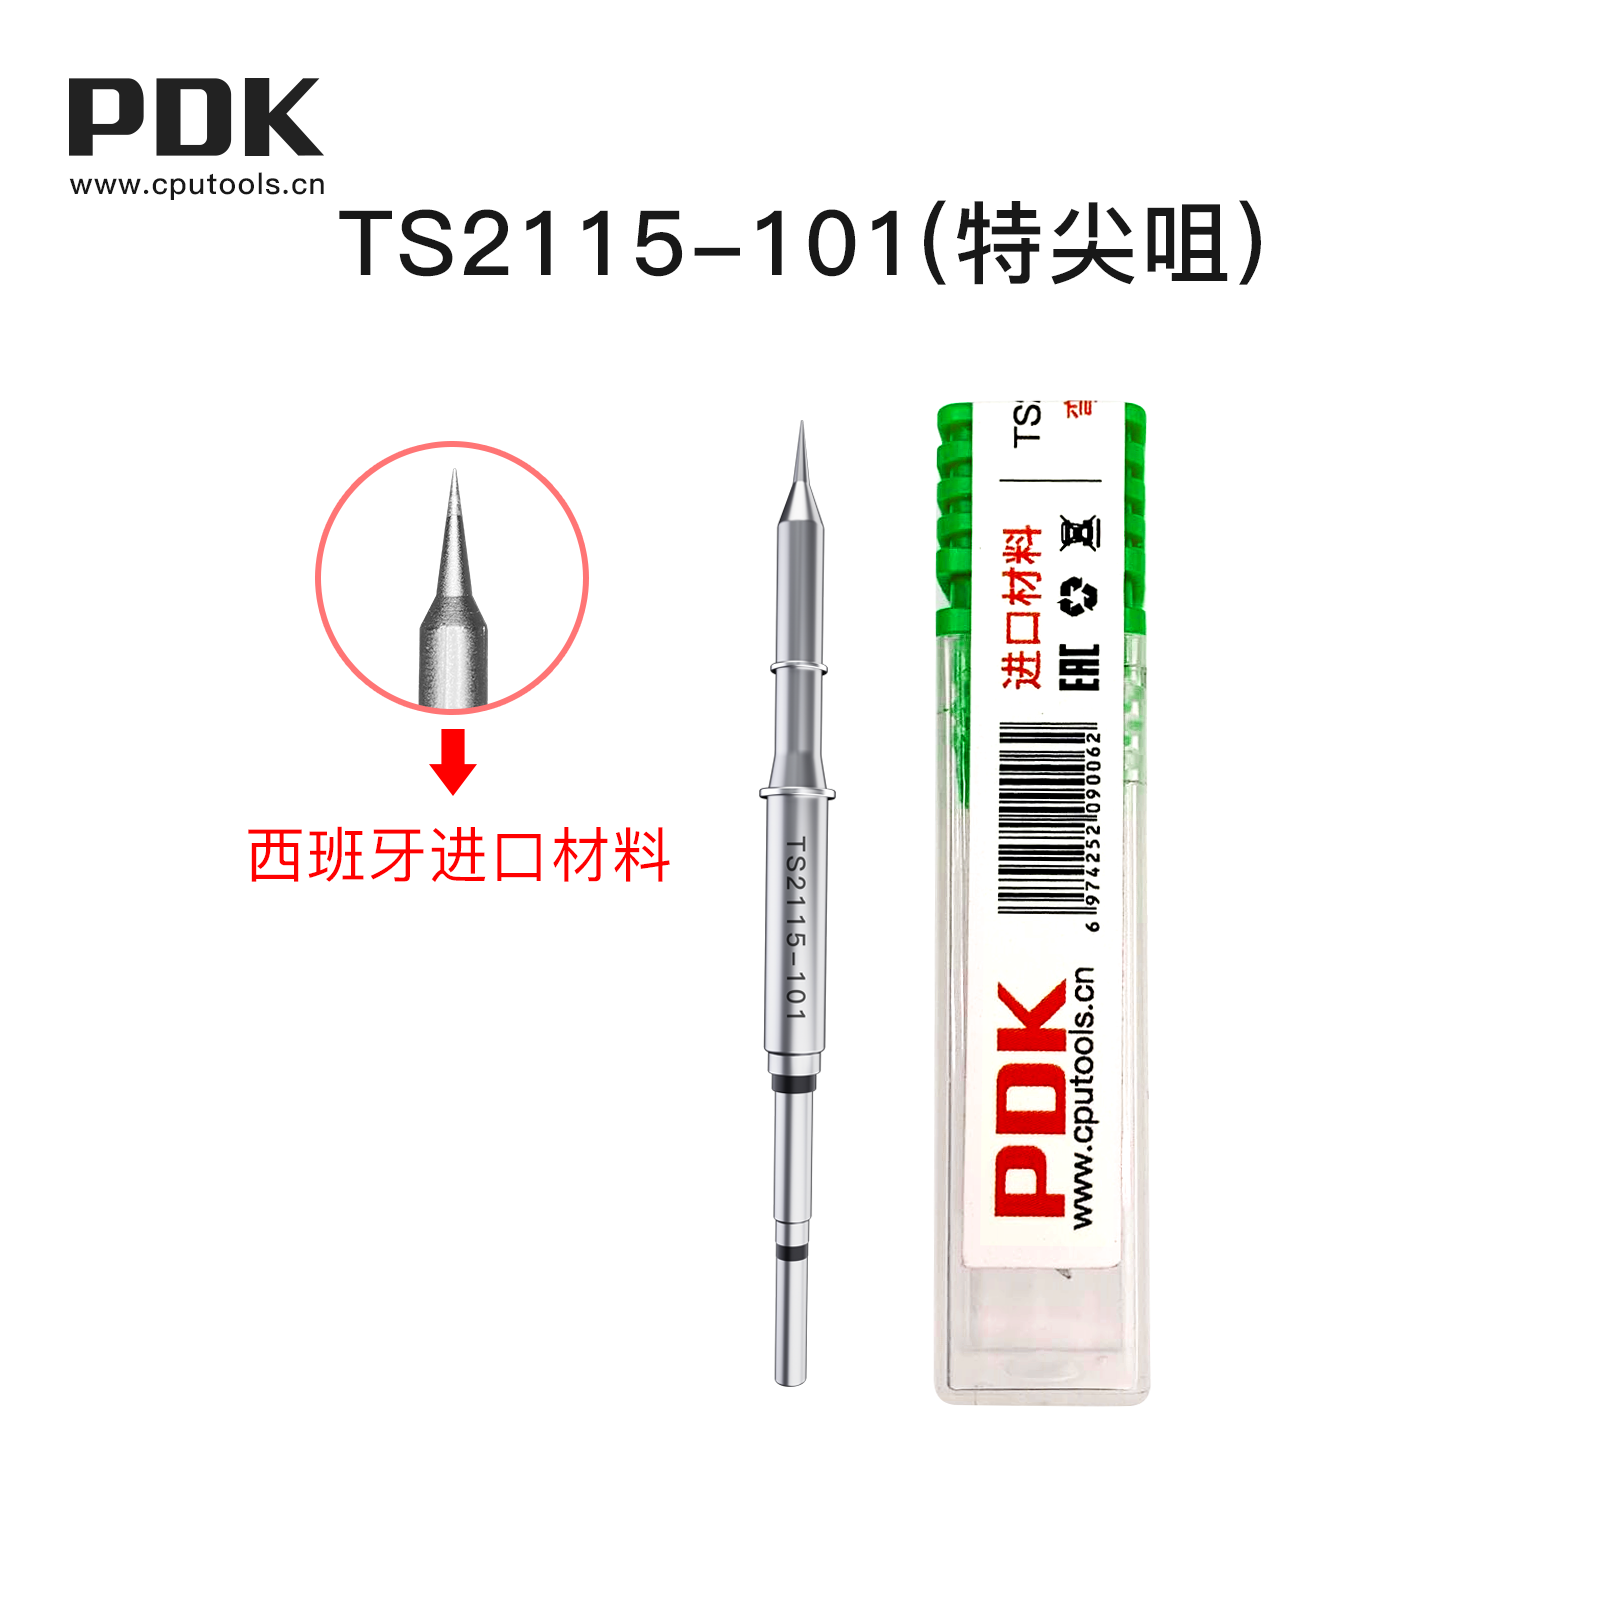 PDK TS2115 Series soldering iron head(图2)